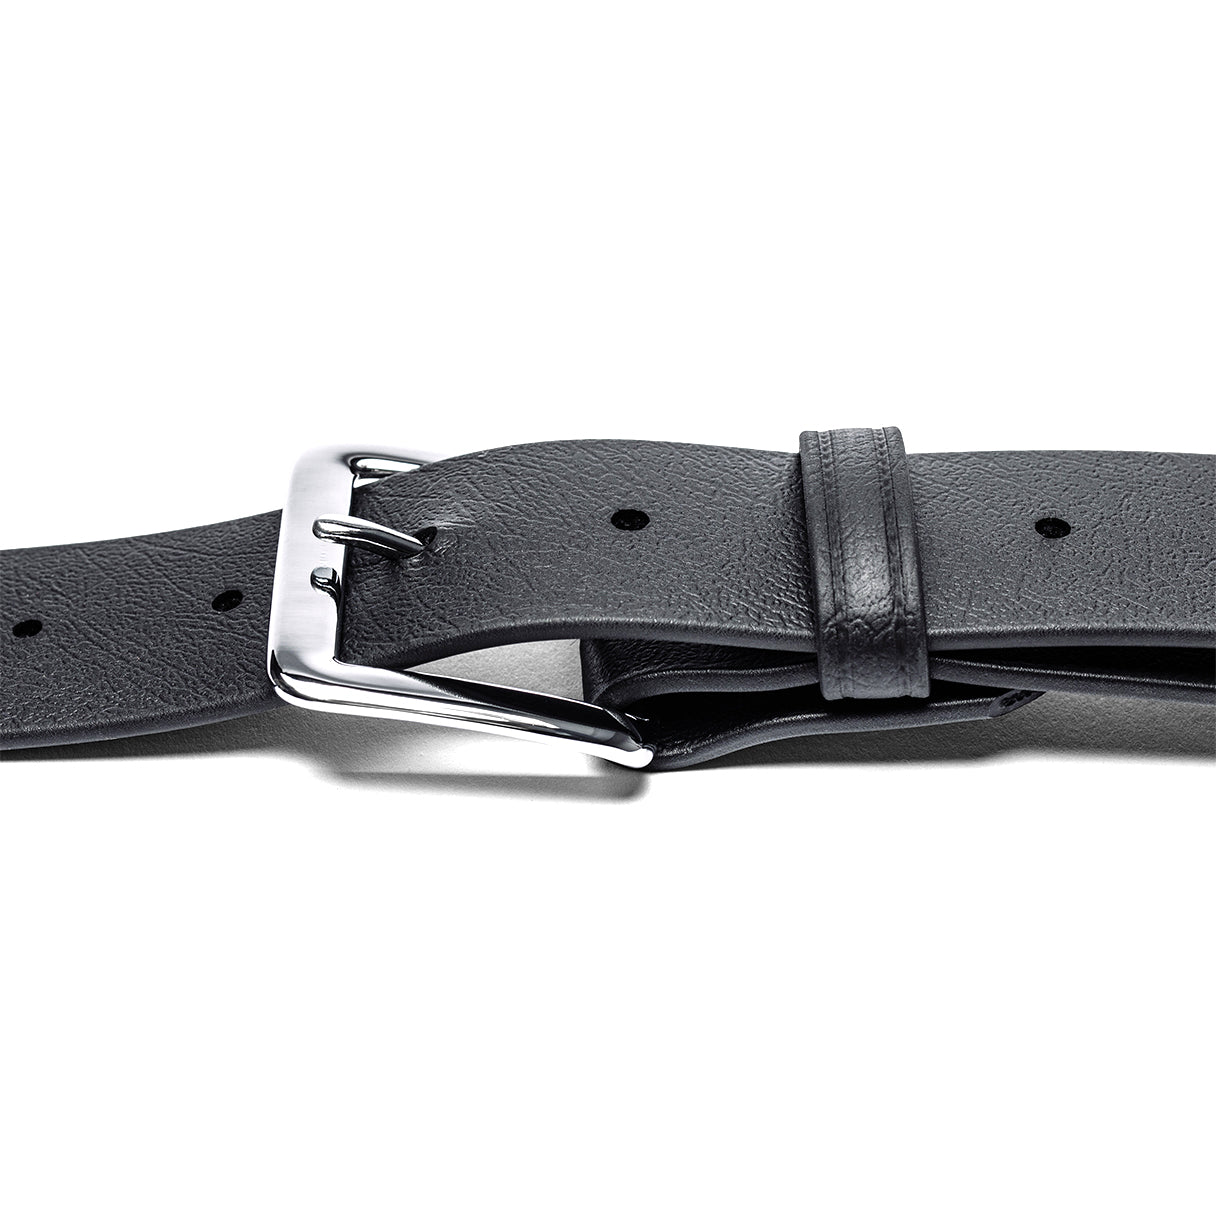 Blade-Tech Men's Ultimate Carry Belt